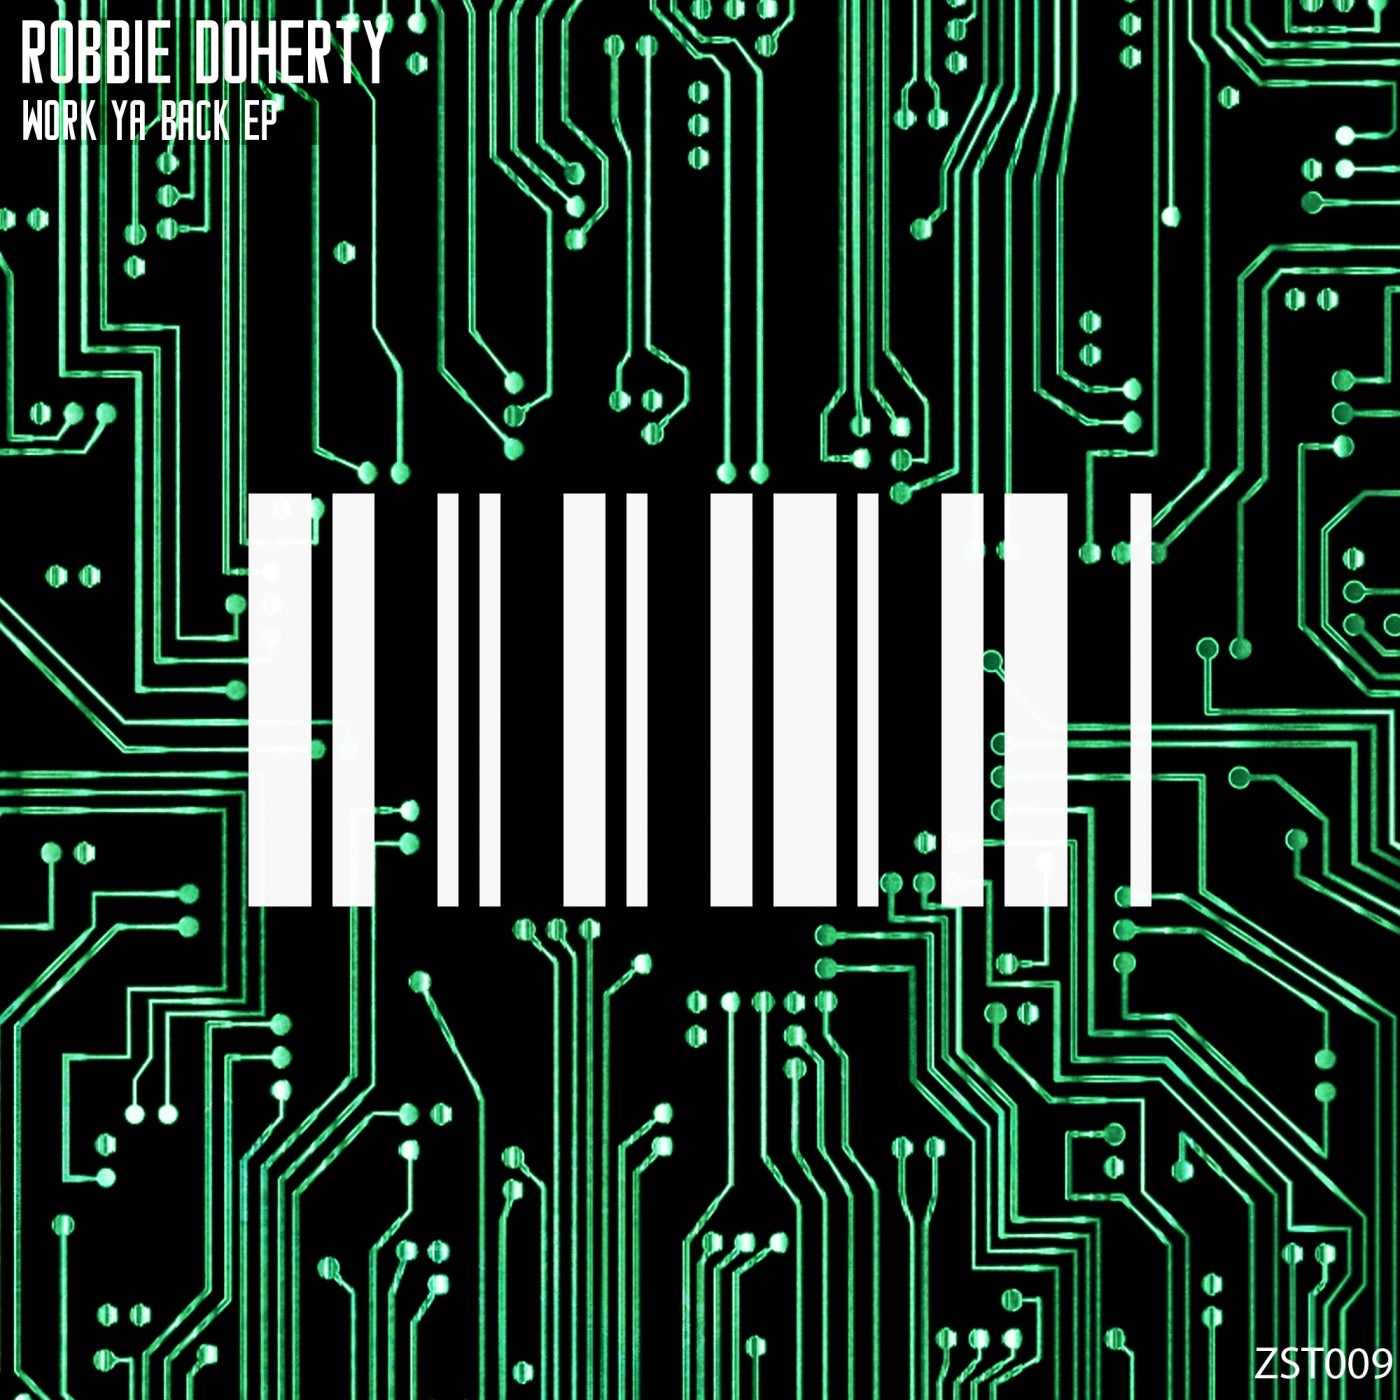 Robbie Doherty - Work Ya Back EP [ZST009]